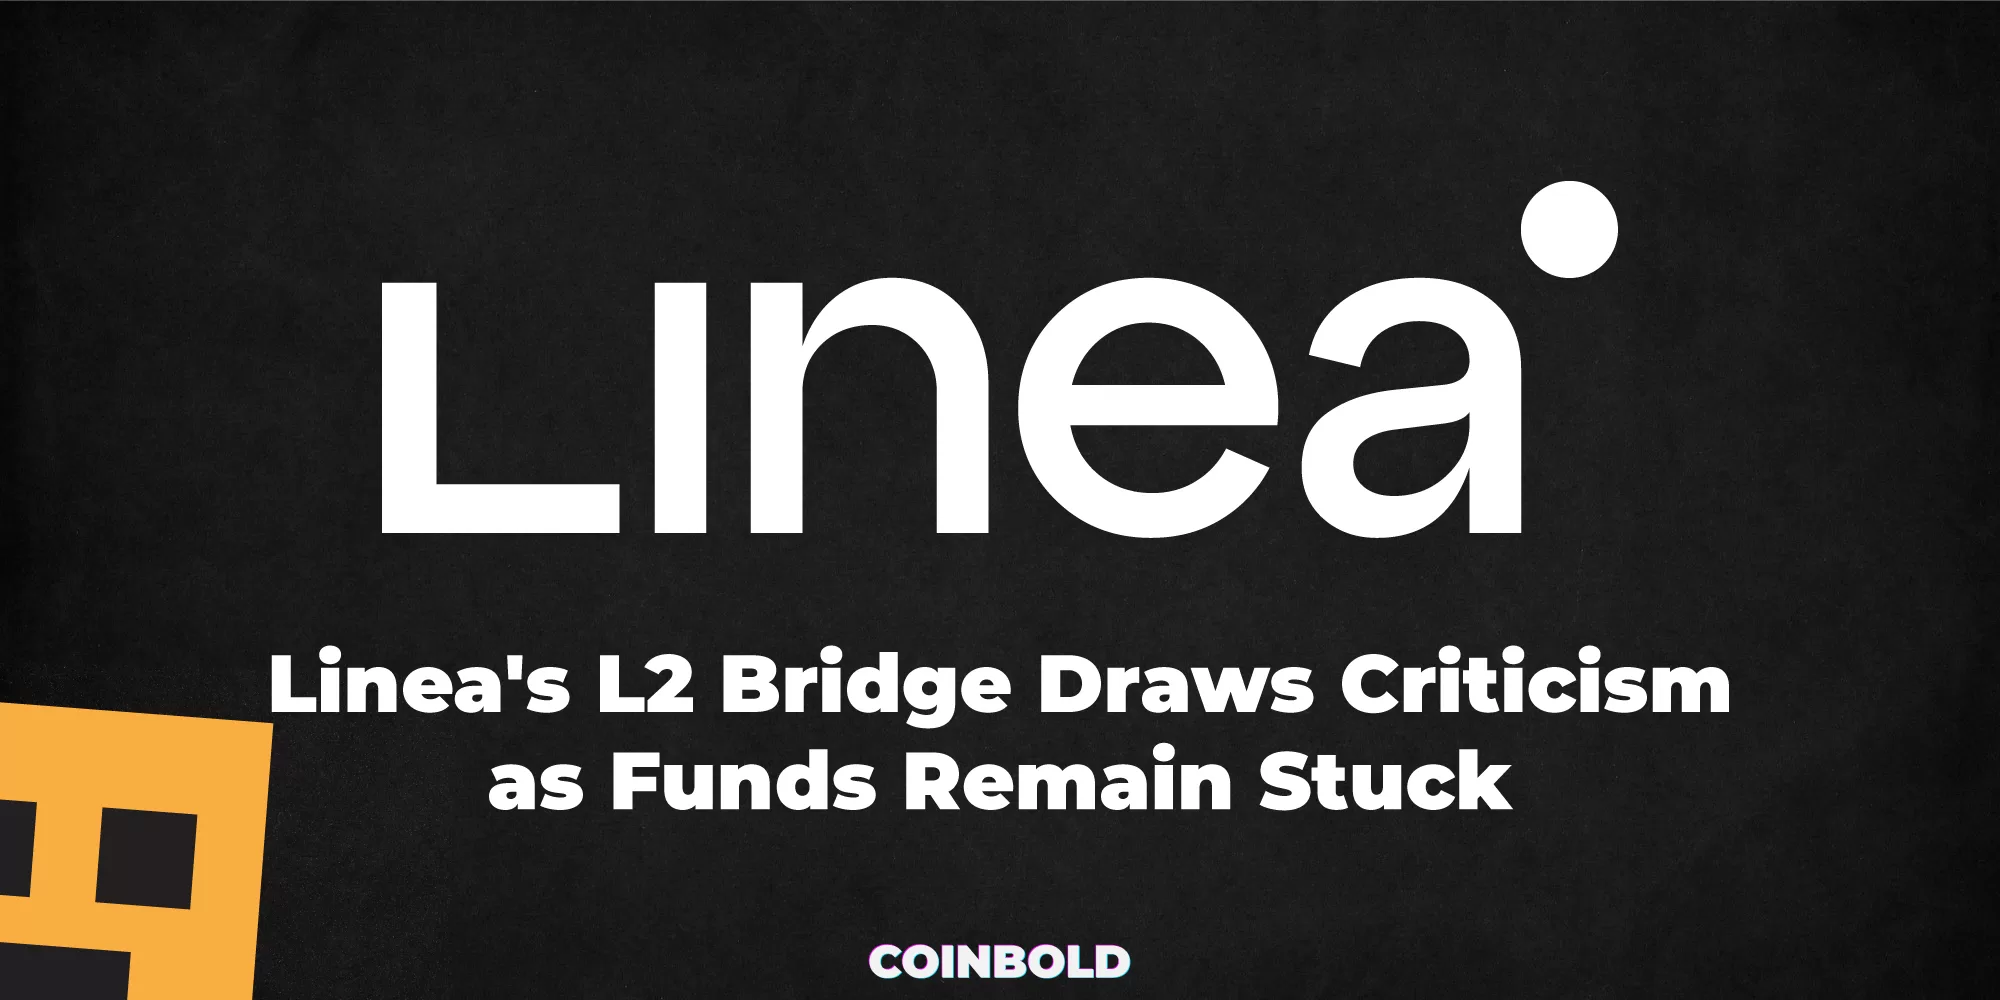 Linea's L2 Bridge Draws Criticism as Funds Remain Stuck